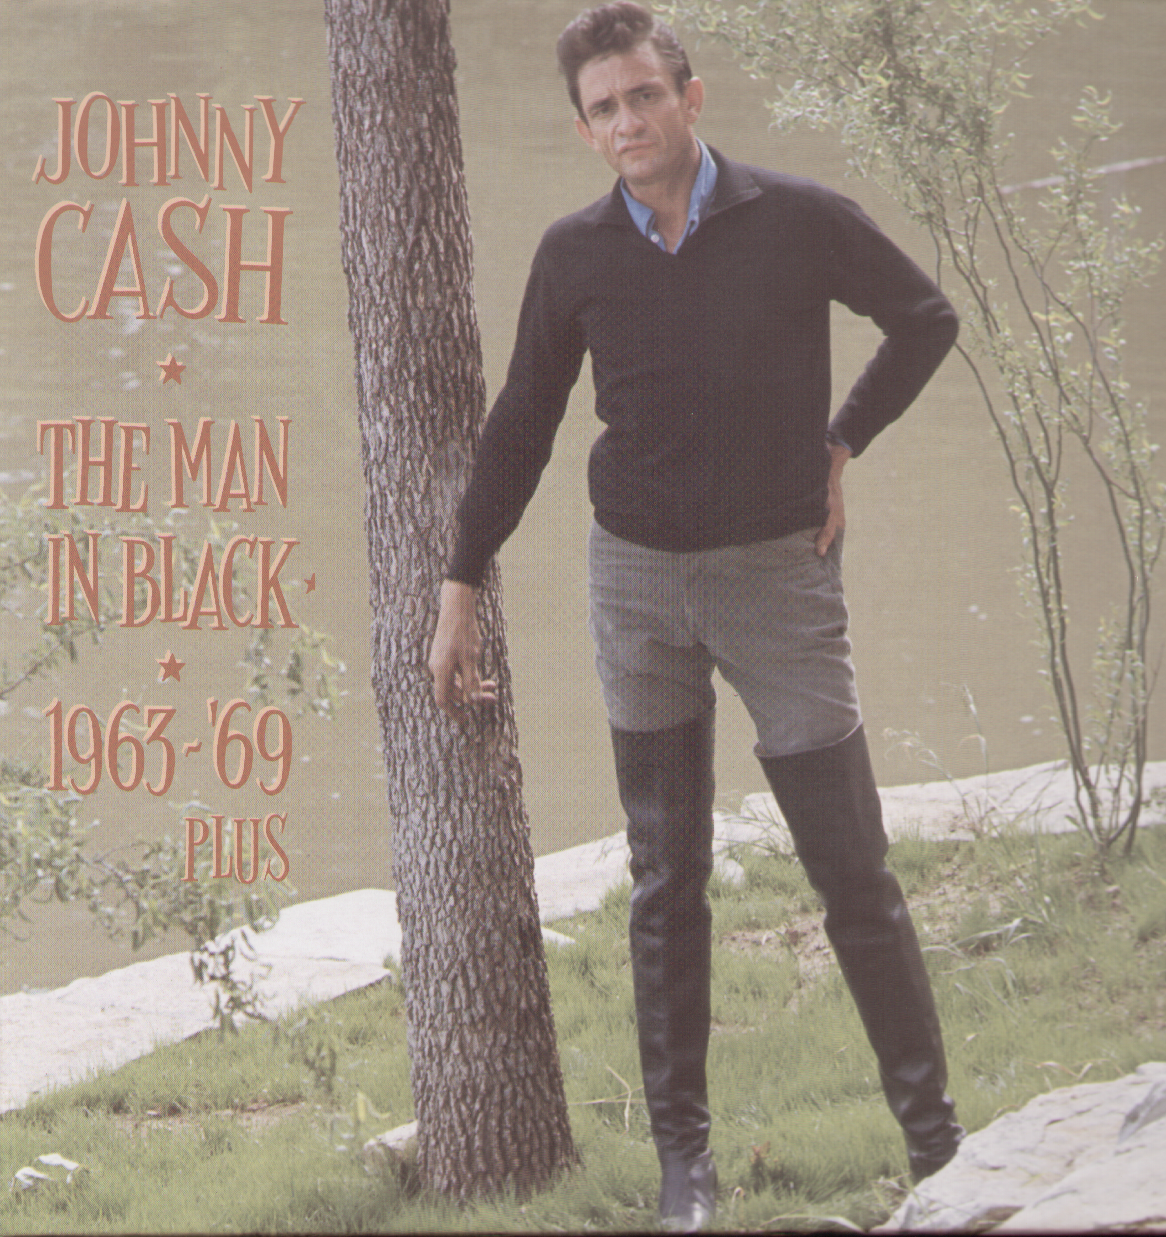 MAN IN BLACK 1963-69 (BOX)